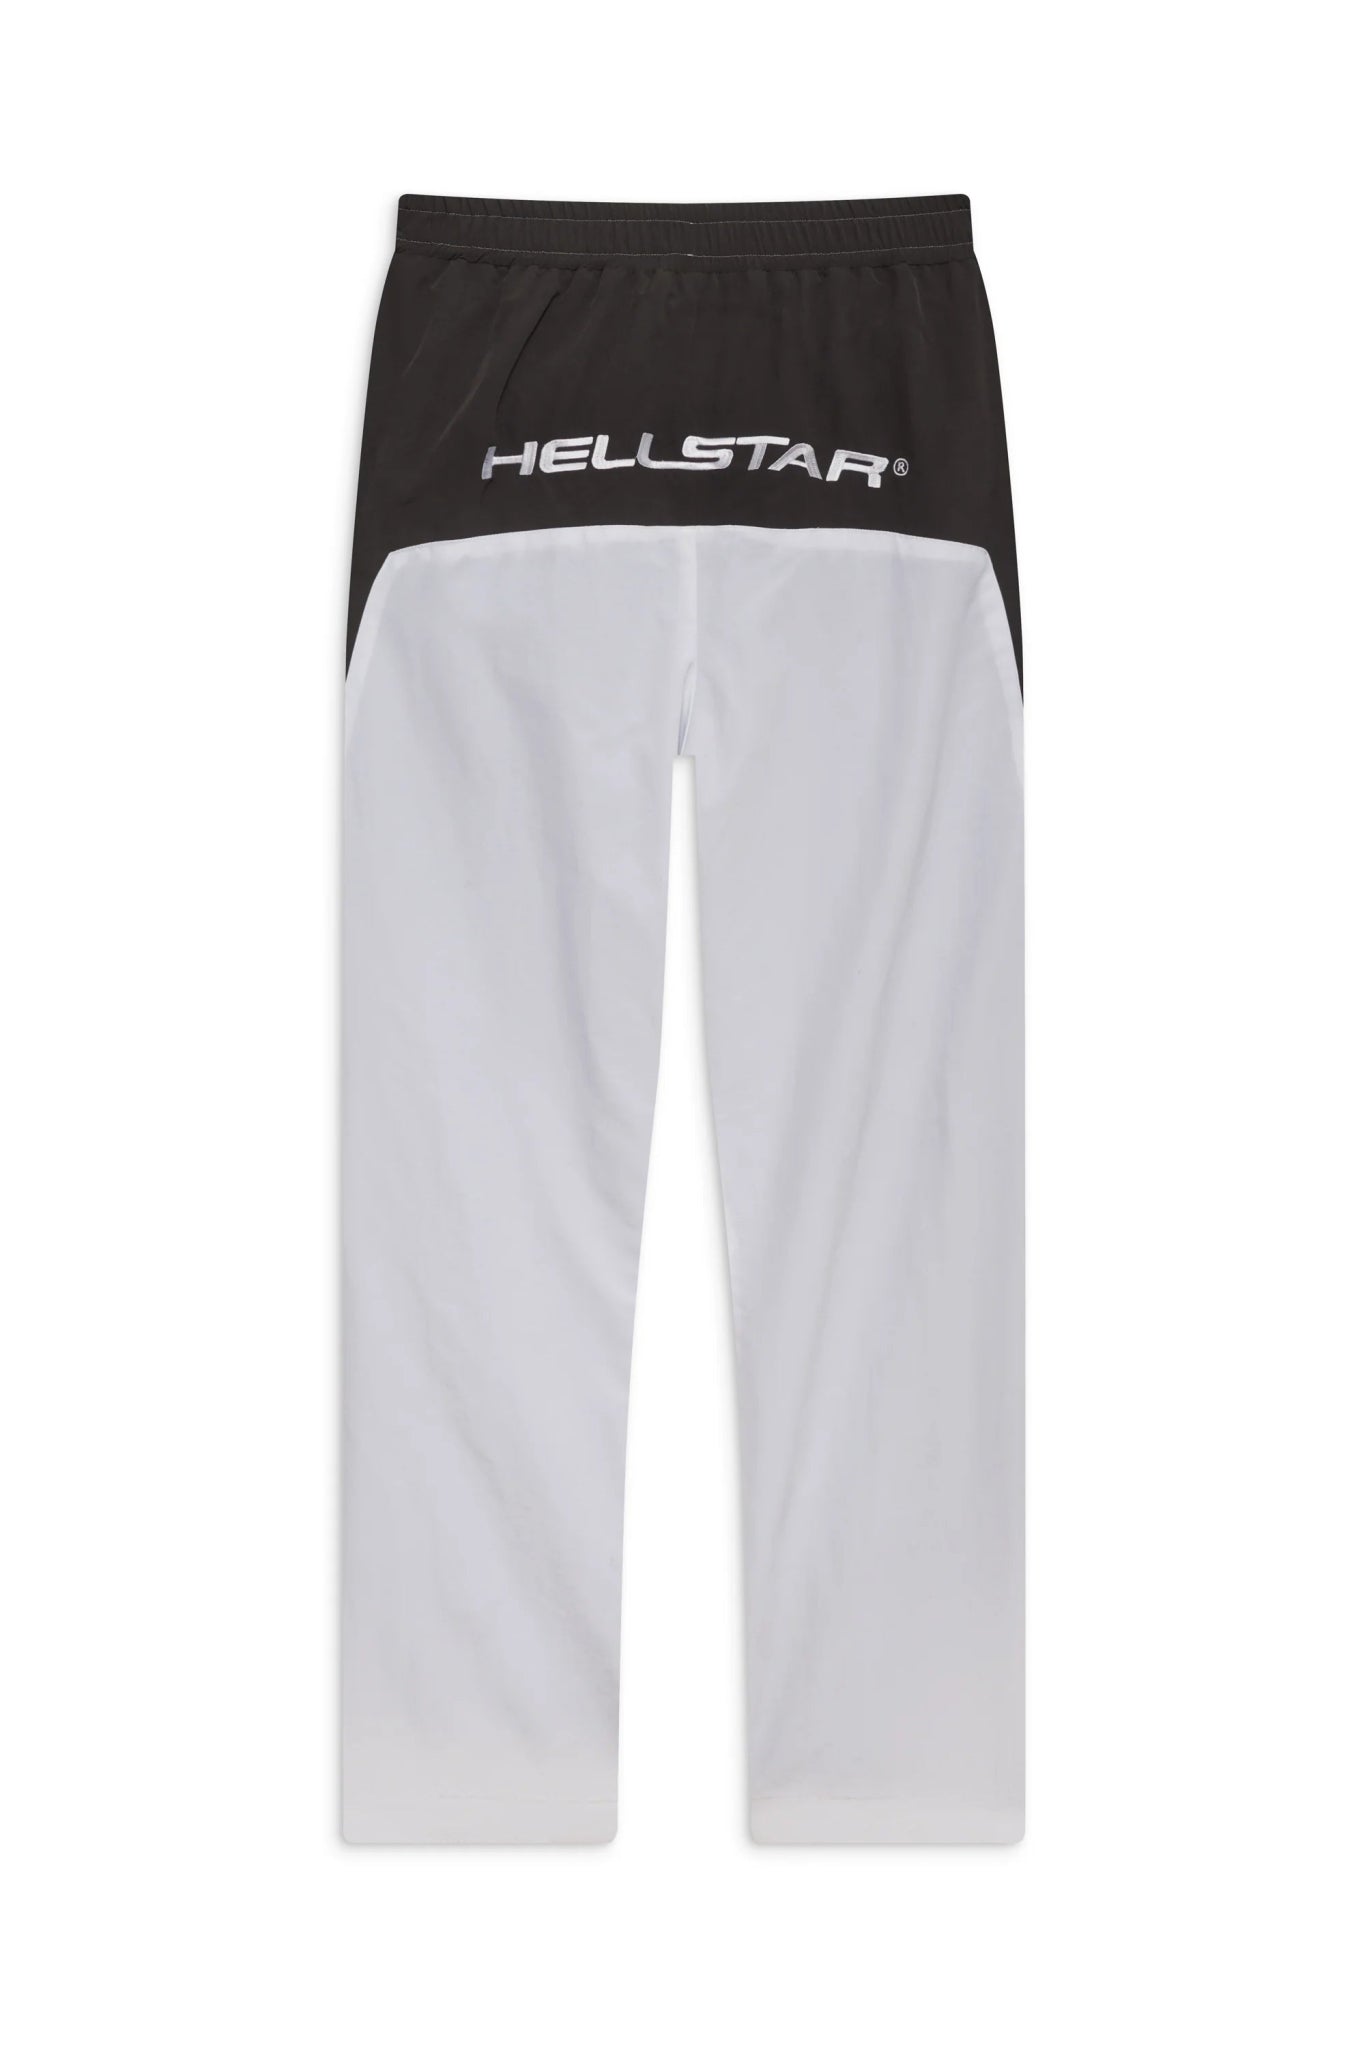 Hellstar Sports White Track Pants - Paroissesaintefoy Sneakers Sale Online